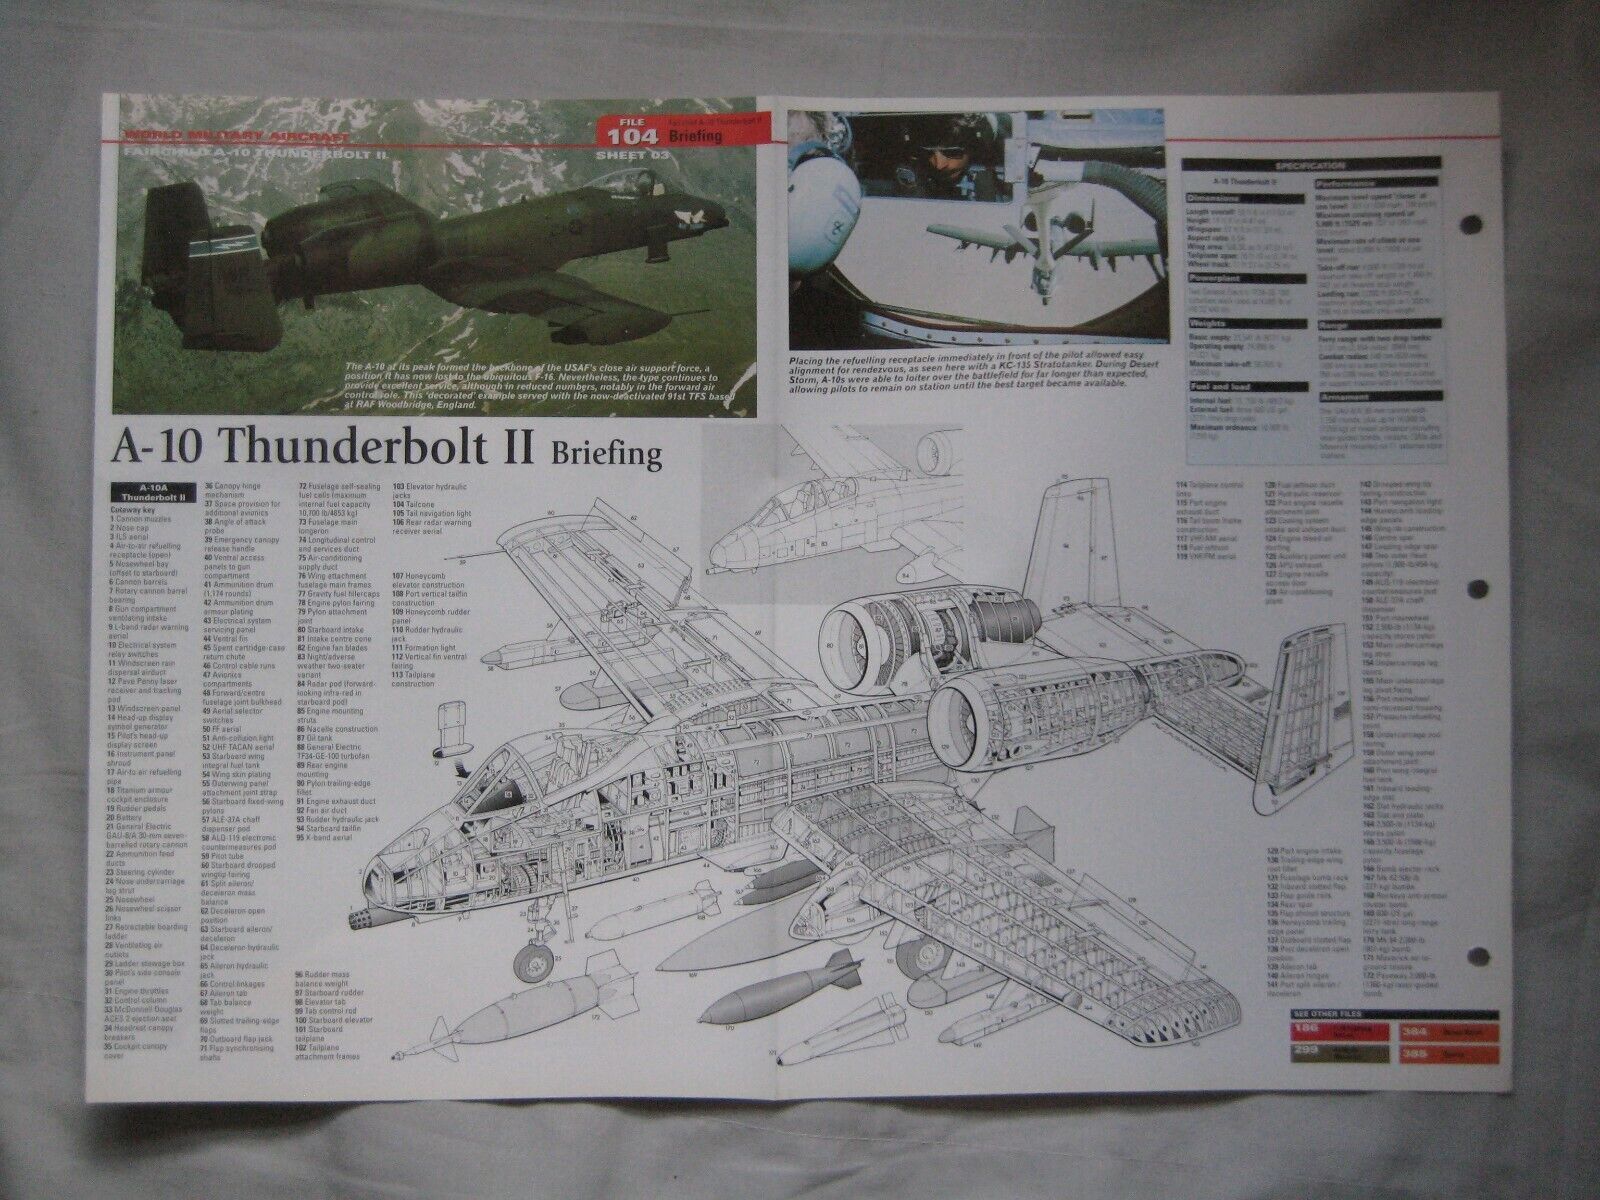 Cutaway Key Drawing of the Fairchild A-10 Thunderbolt II